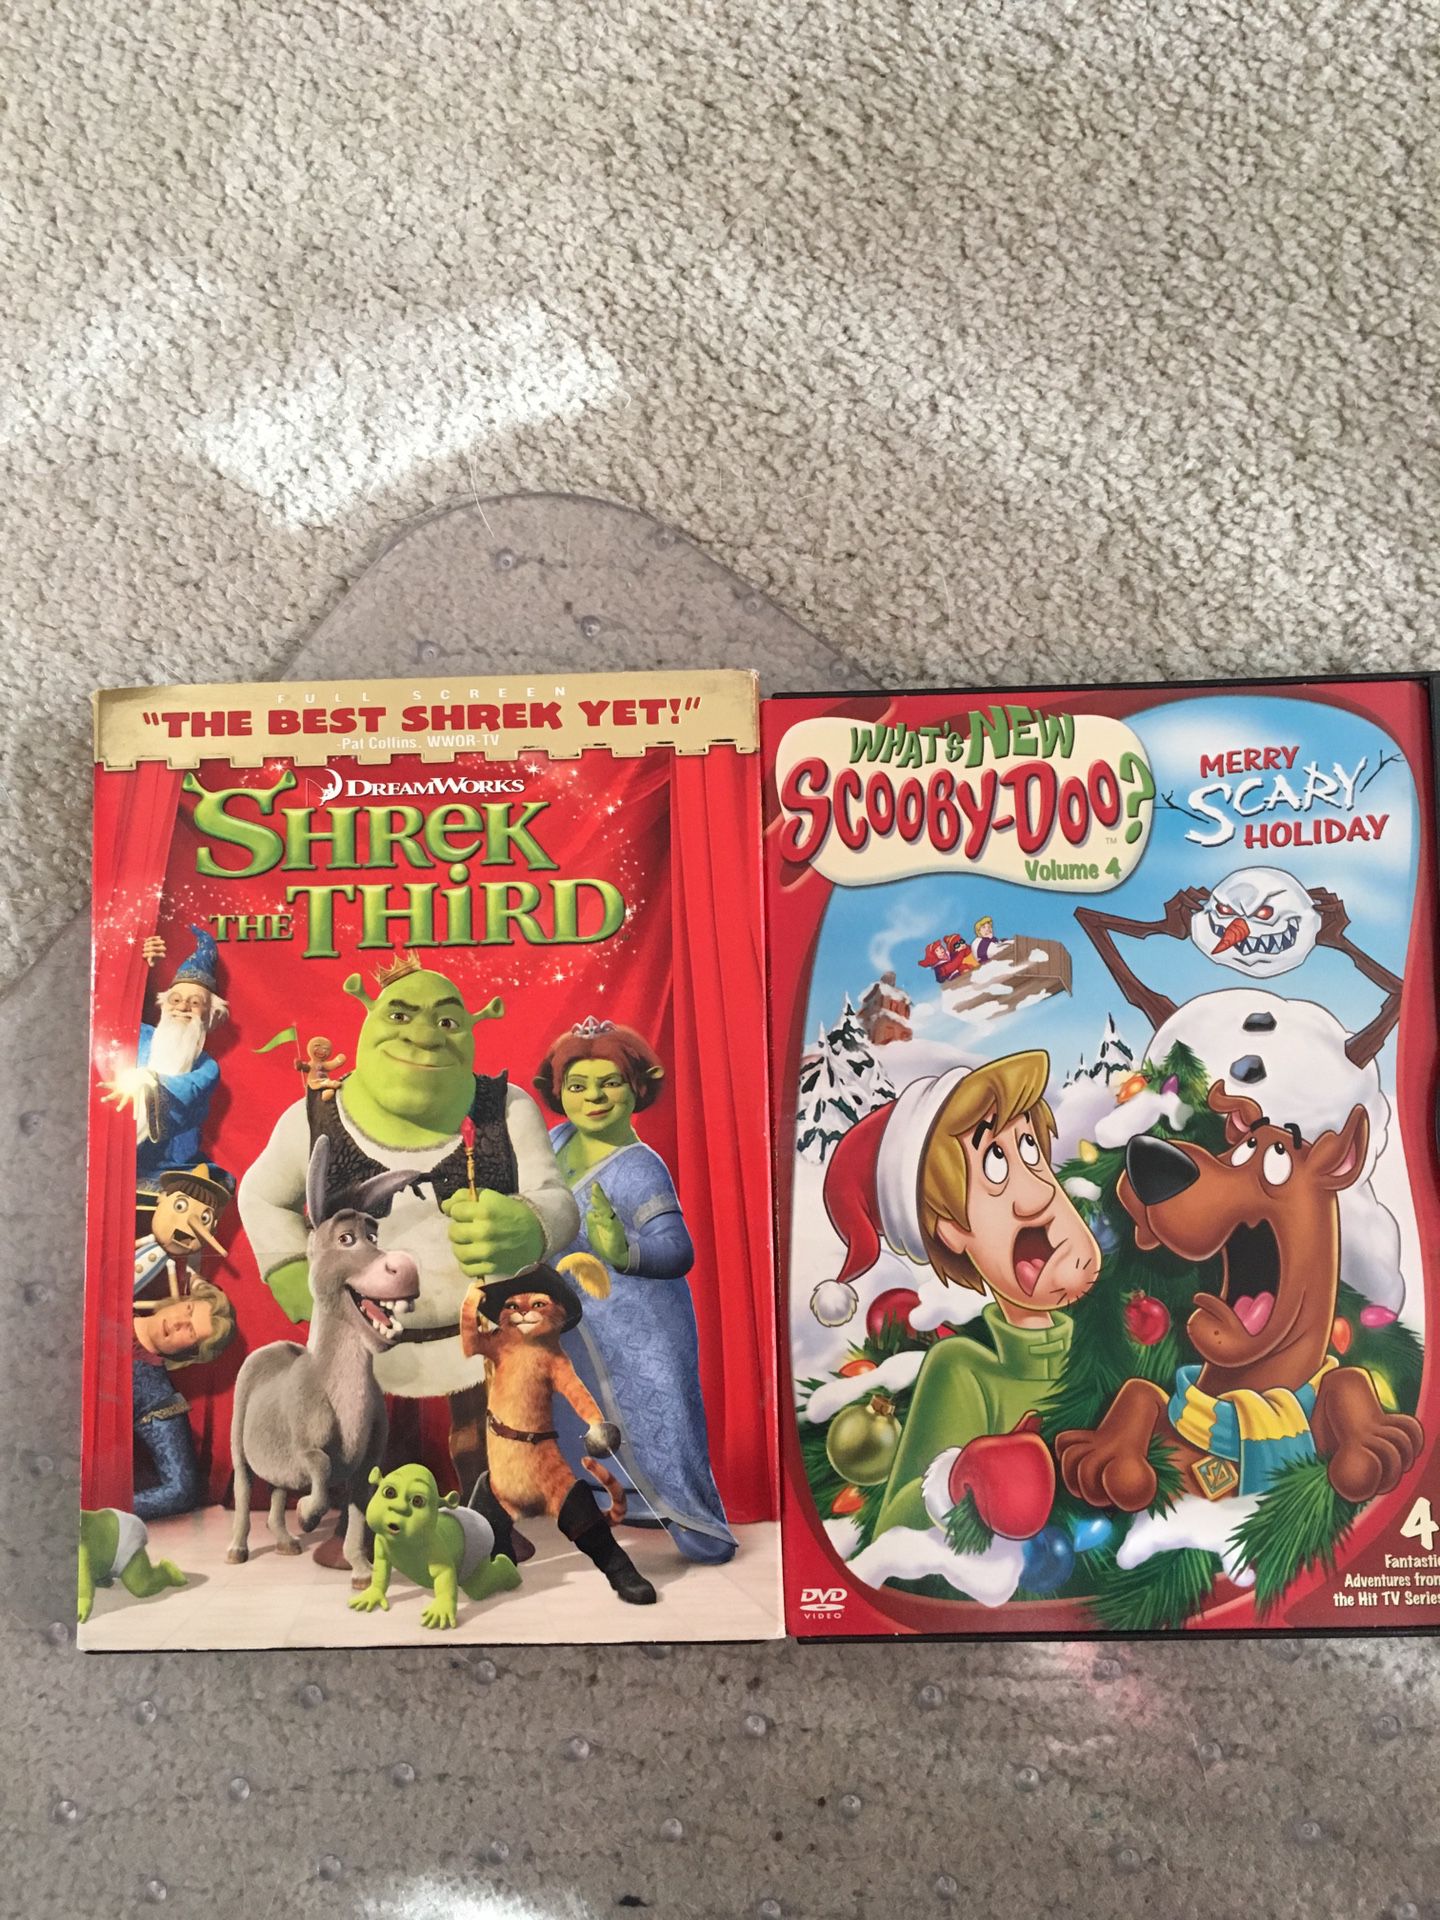 Shrek the Third & Scooby Doo Merry Scary Holiday Christmas DVD’s like new $5 EACH 153 & Blondo